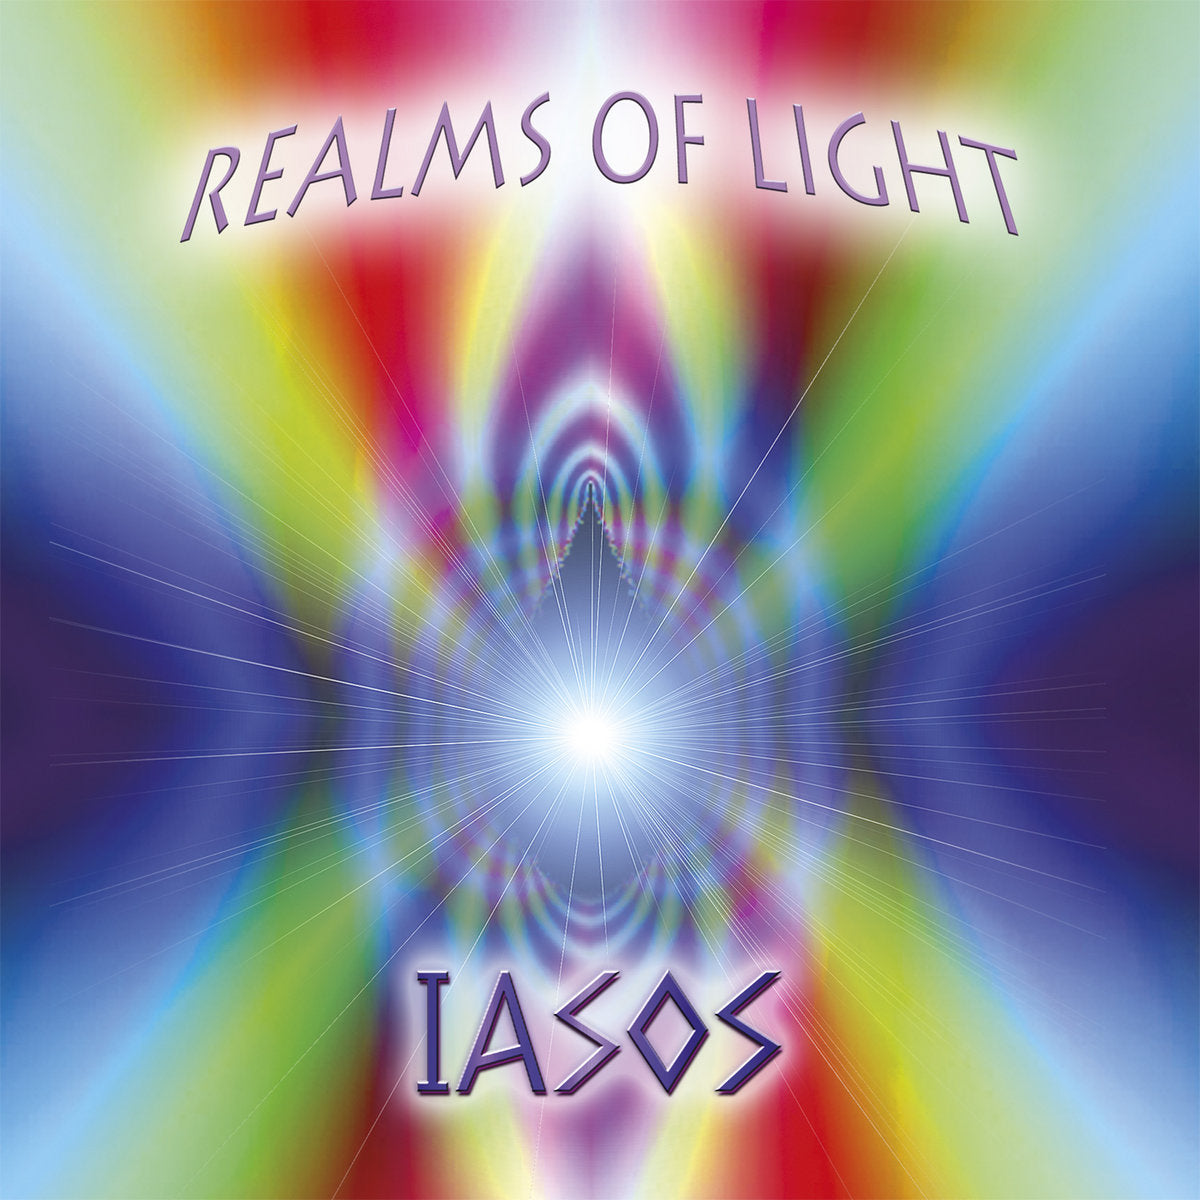 [SOLD OUT] IASOS "Realms of Light" Vinyl LP